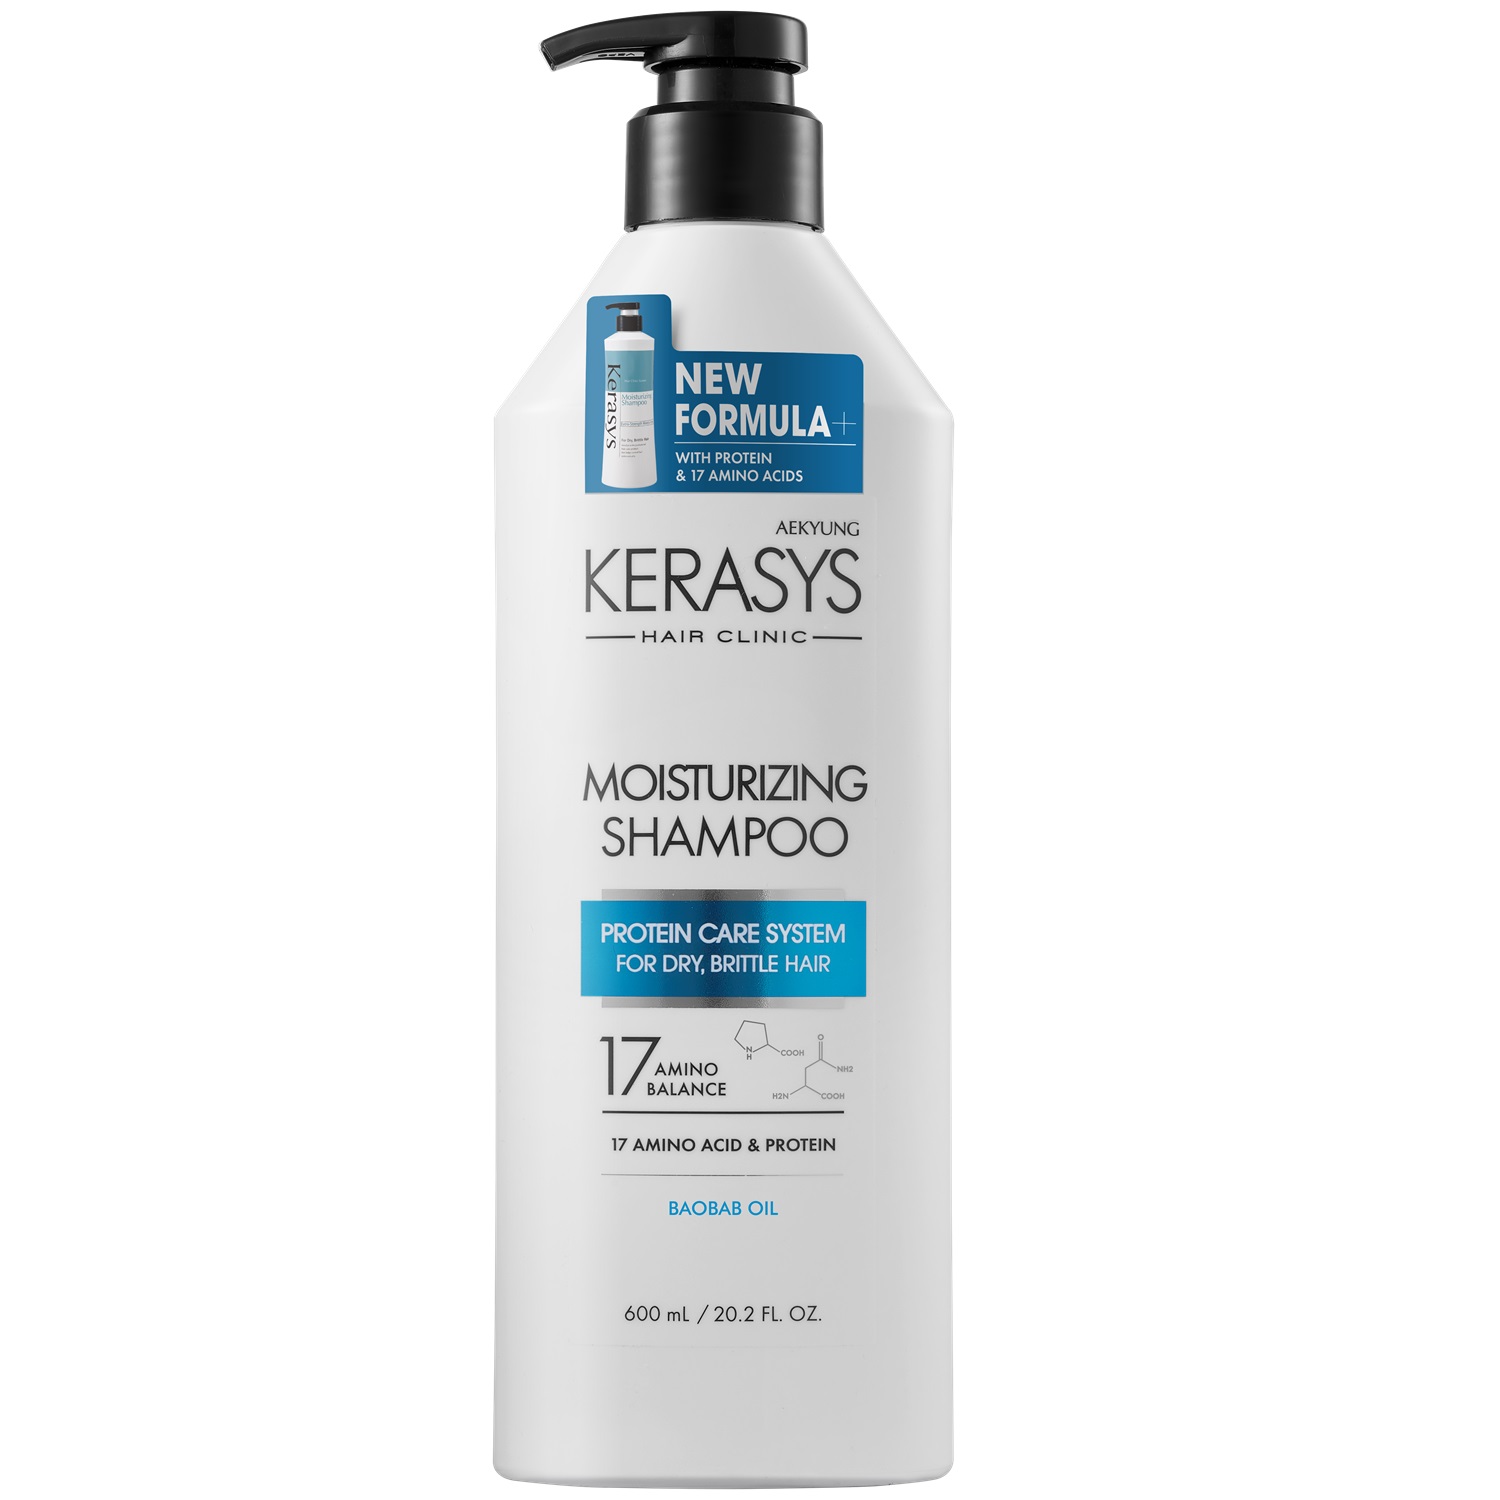 Kerasys Hair Clinic Moisturizing Шампунь увлажняющий для волос 600 мл (Kerasys, ) kerasys увлажняющий набор шампунь и кондиционер для сухих и ломких волос moisturizing